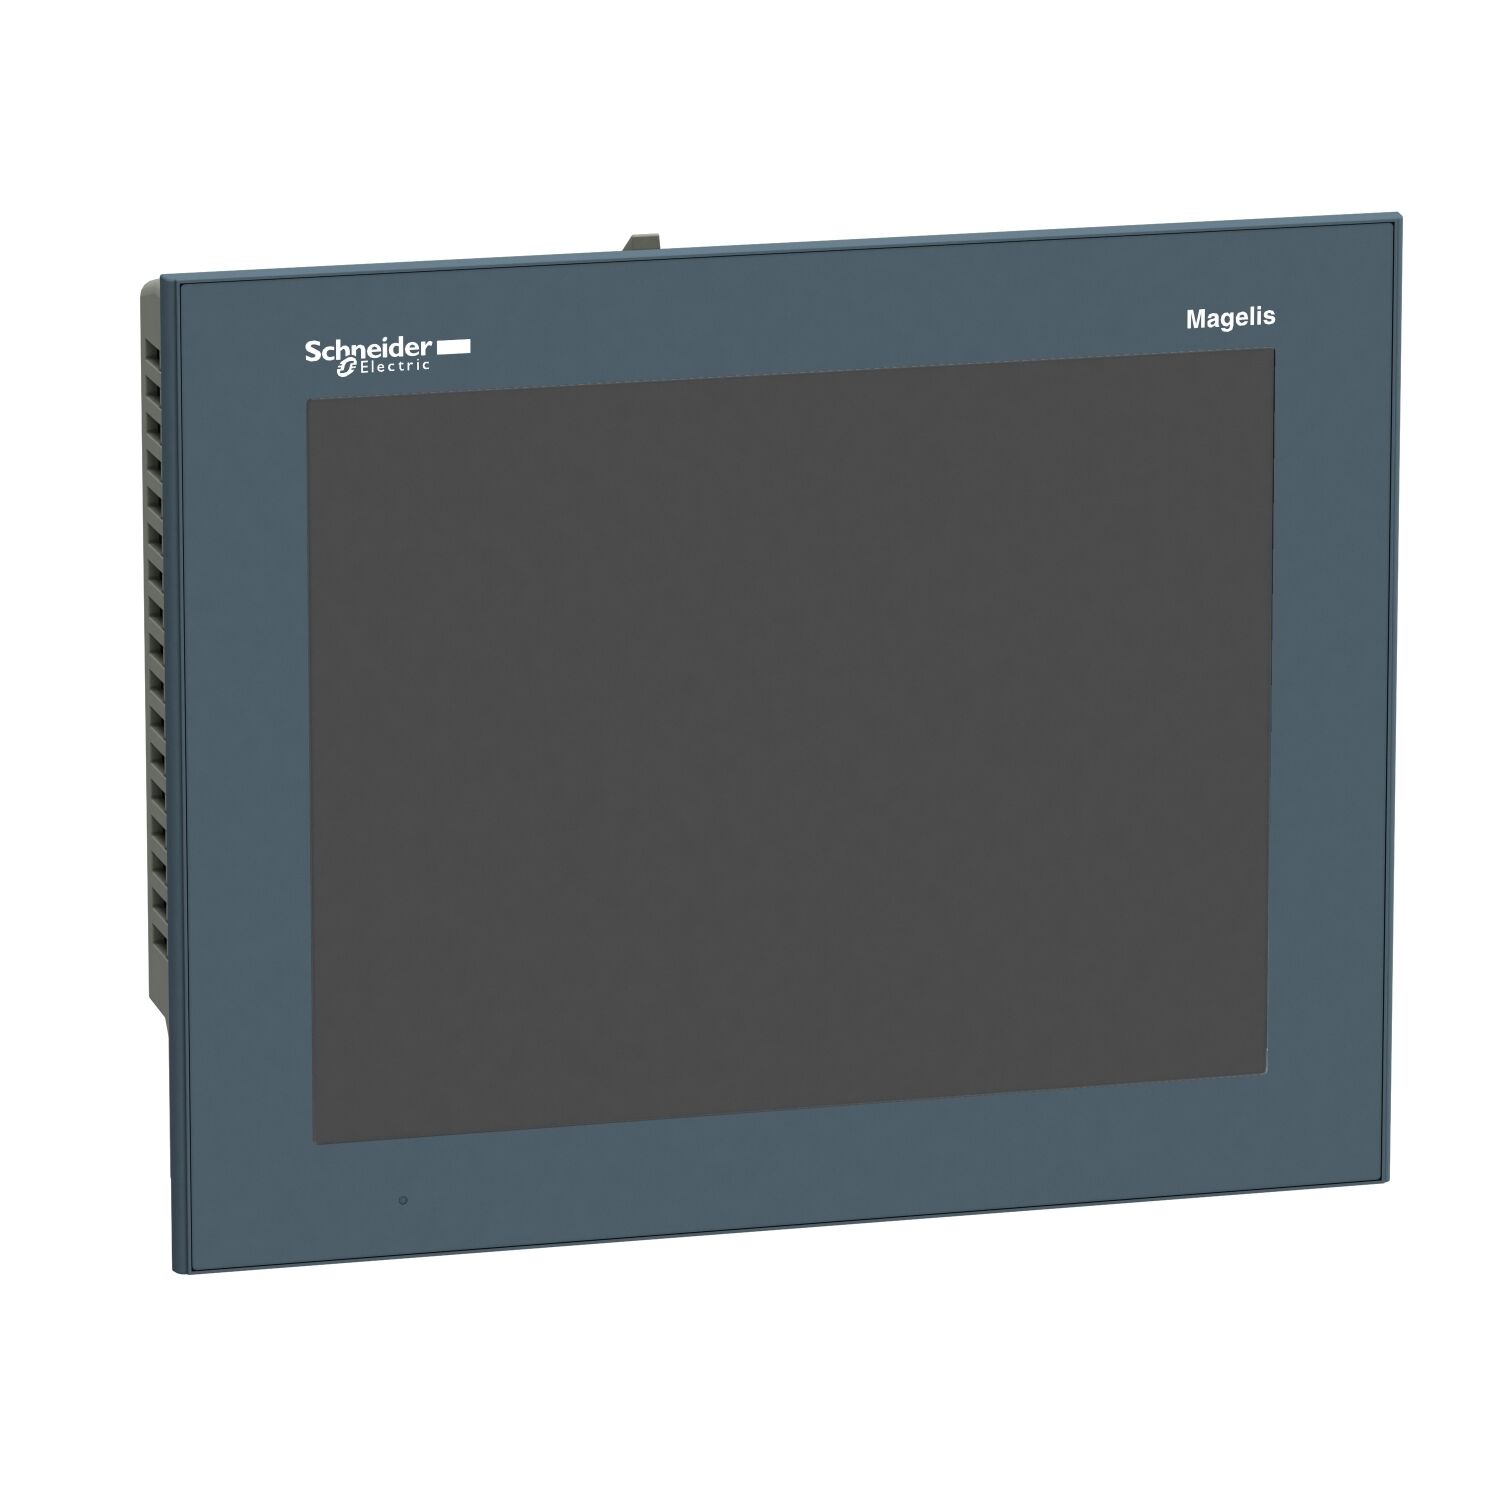 Schneider Electric HMIGTO5310 Dokunmatik Operatör Paneli 640 X 480 Piksel Vga- 10,4'' - Tft - 96 Mb